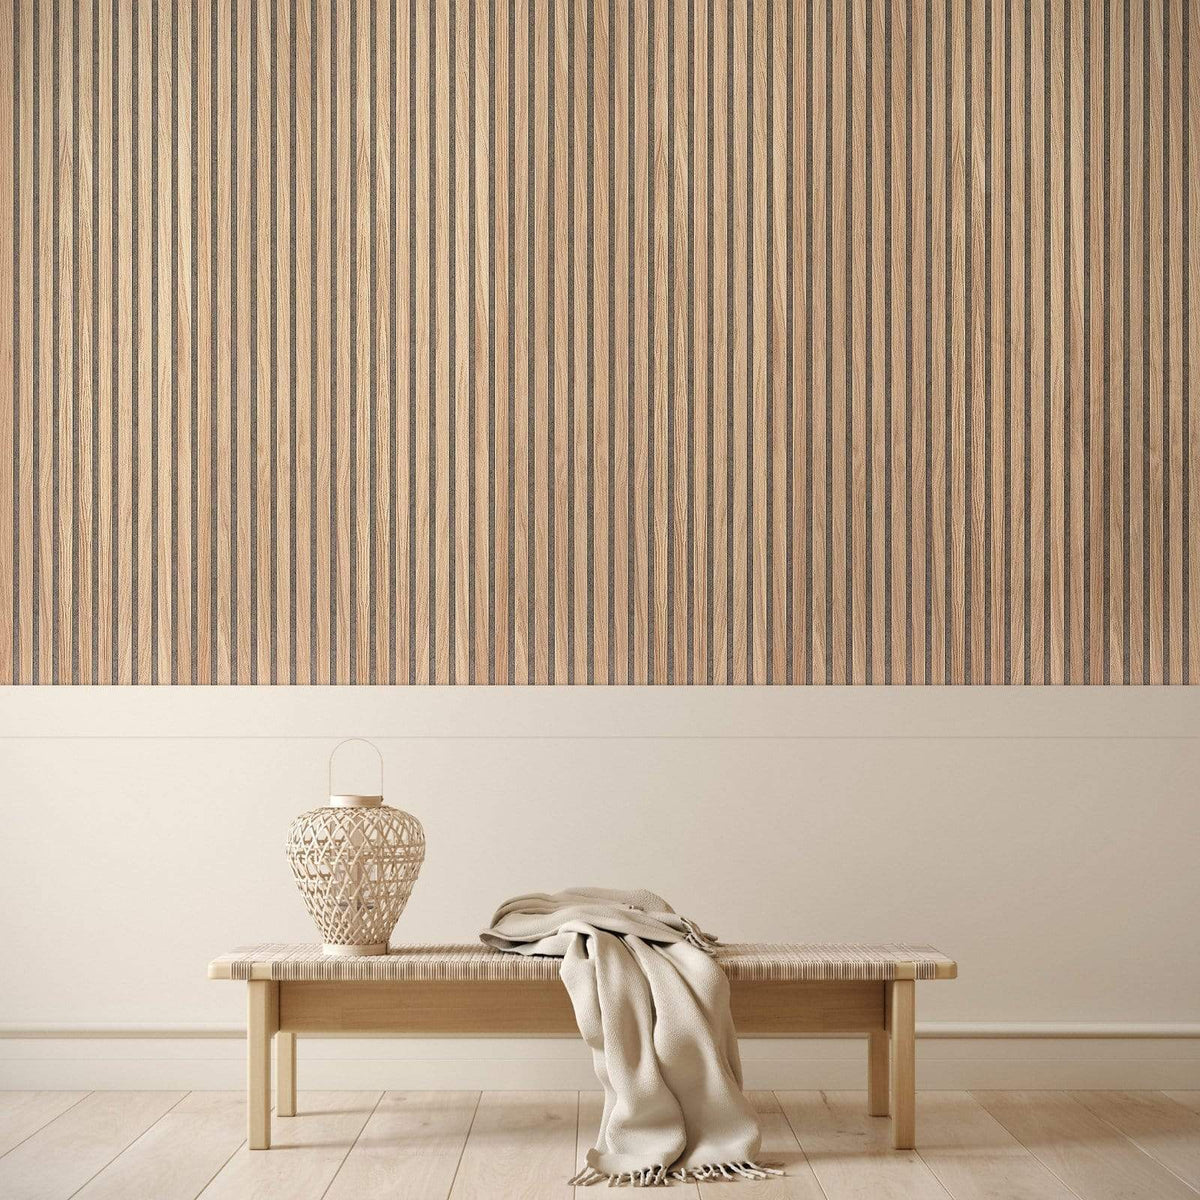 Wood Acoustic Wall Panels